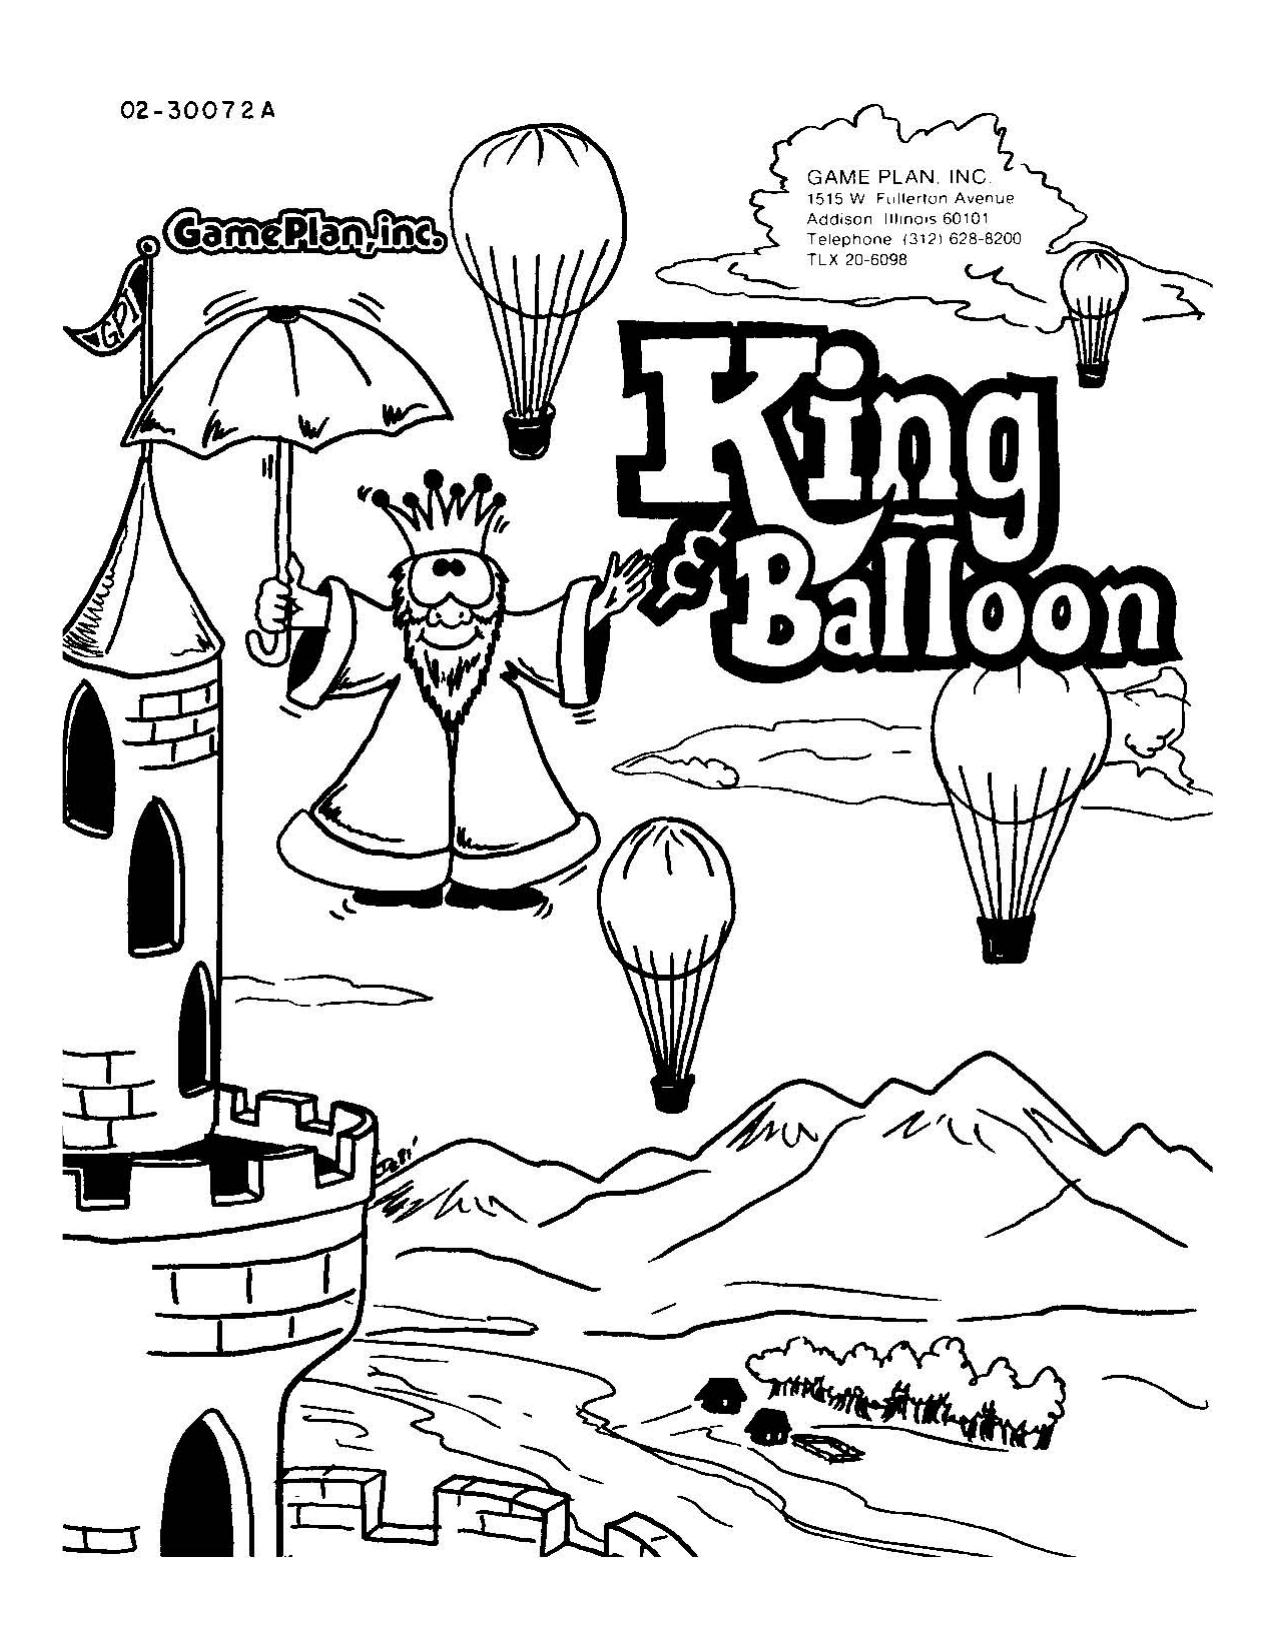 King and Balloon (U)